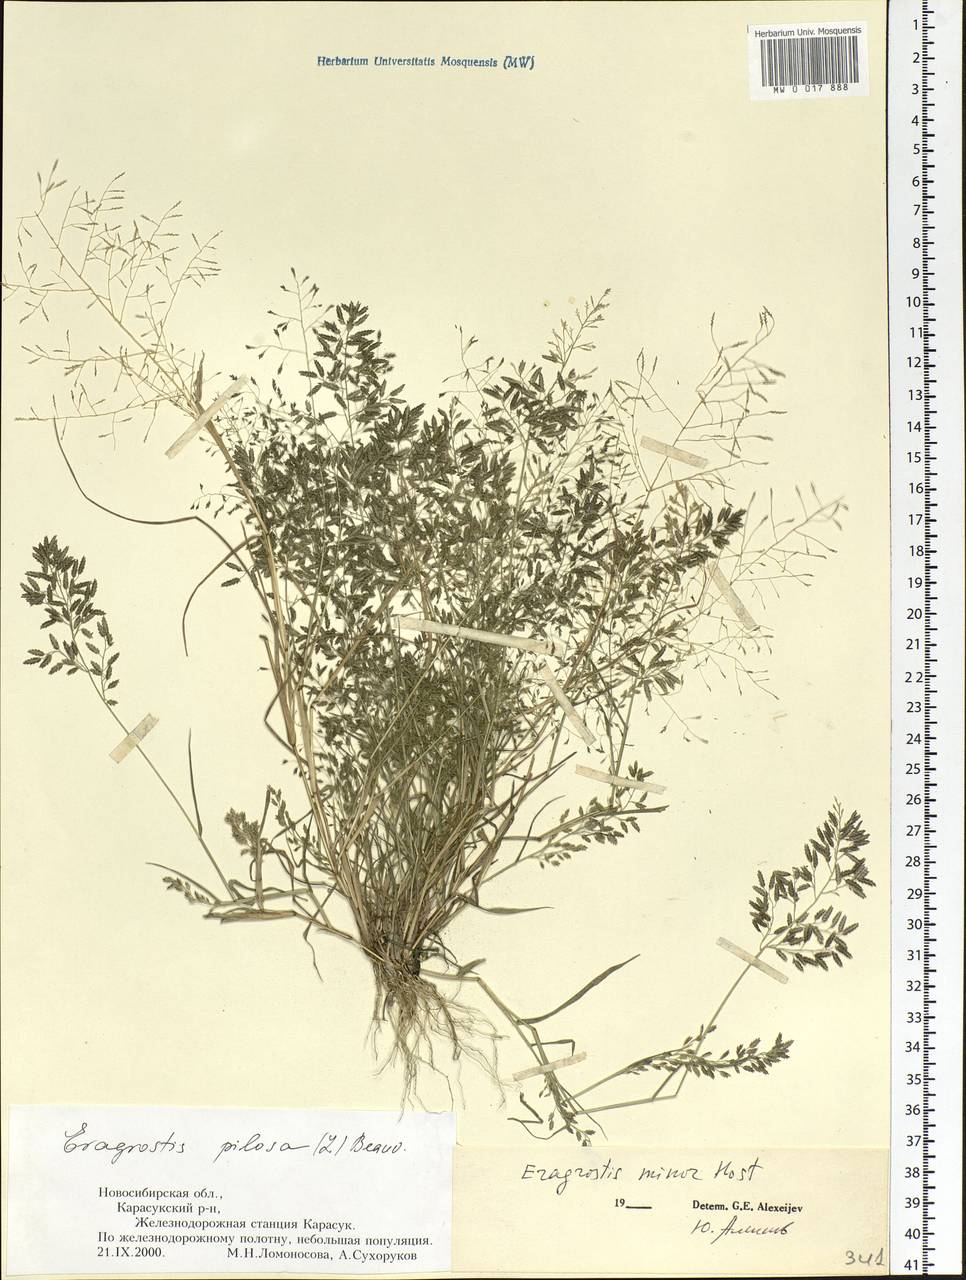 Eragrostis minor Host, Siberia, Western Siberia (S1) (Russia)